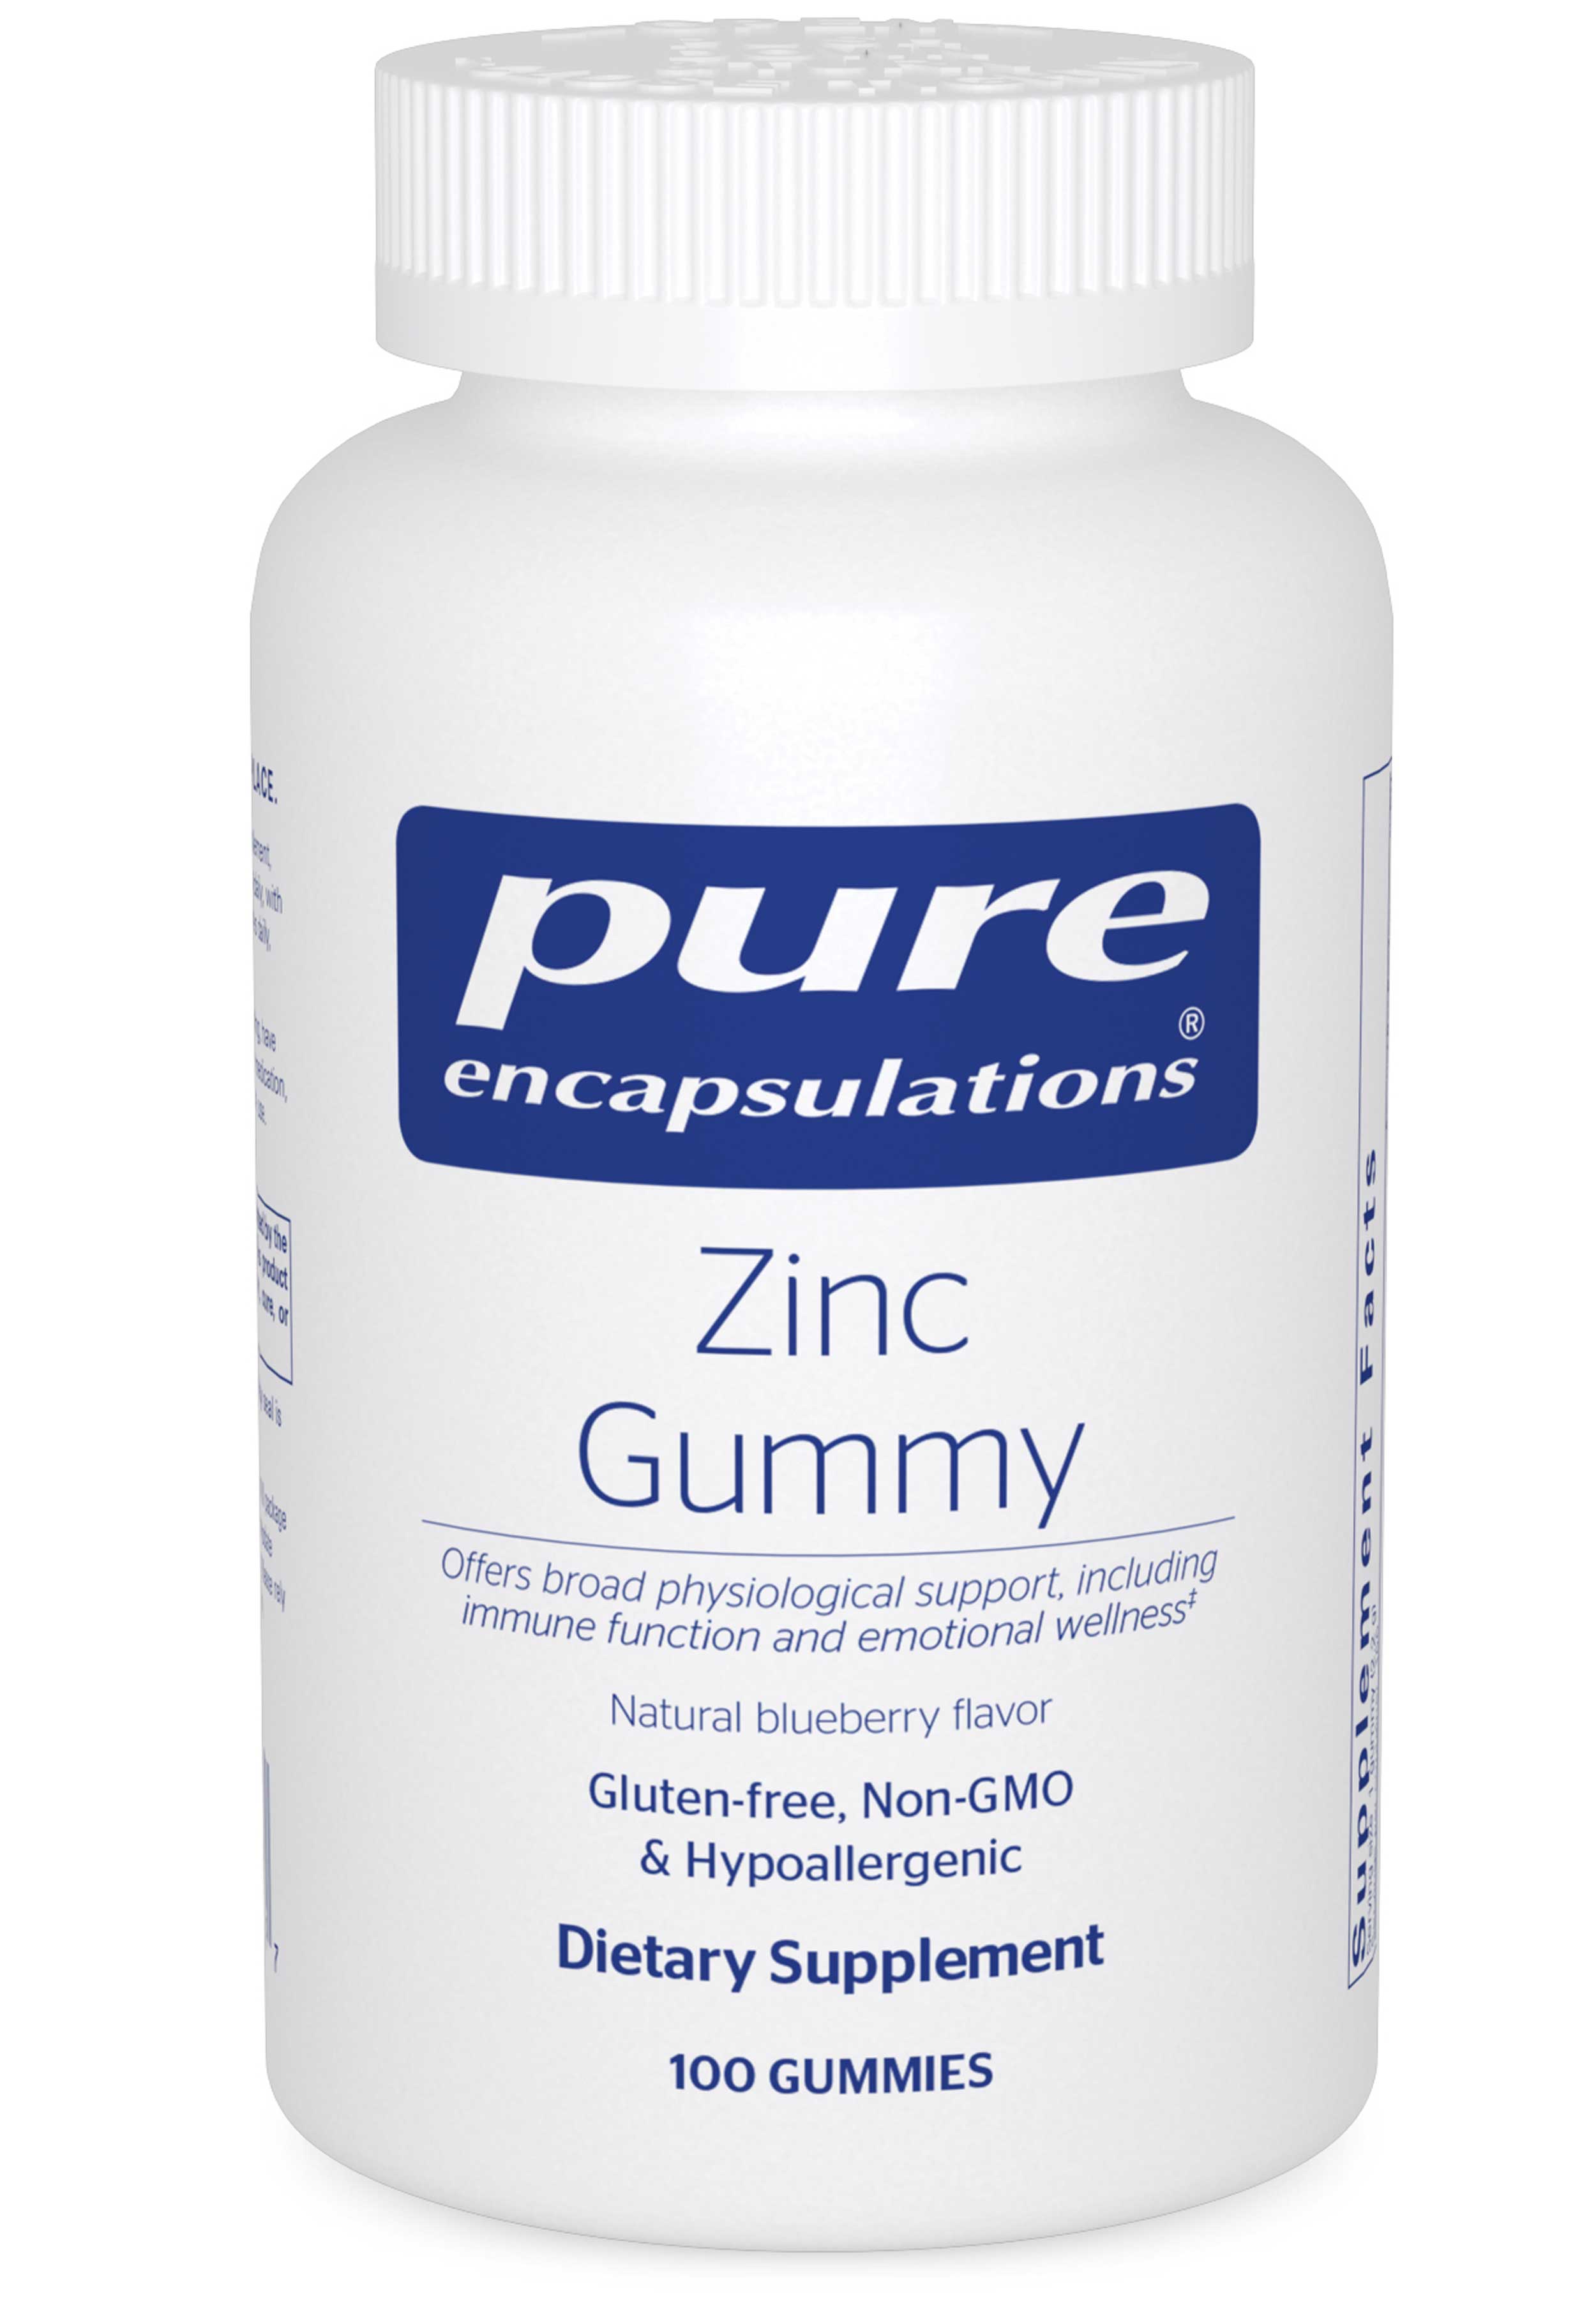 Pure Encapsulations Zinc Gummy